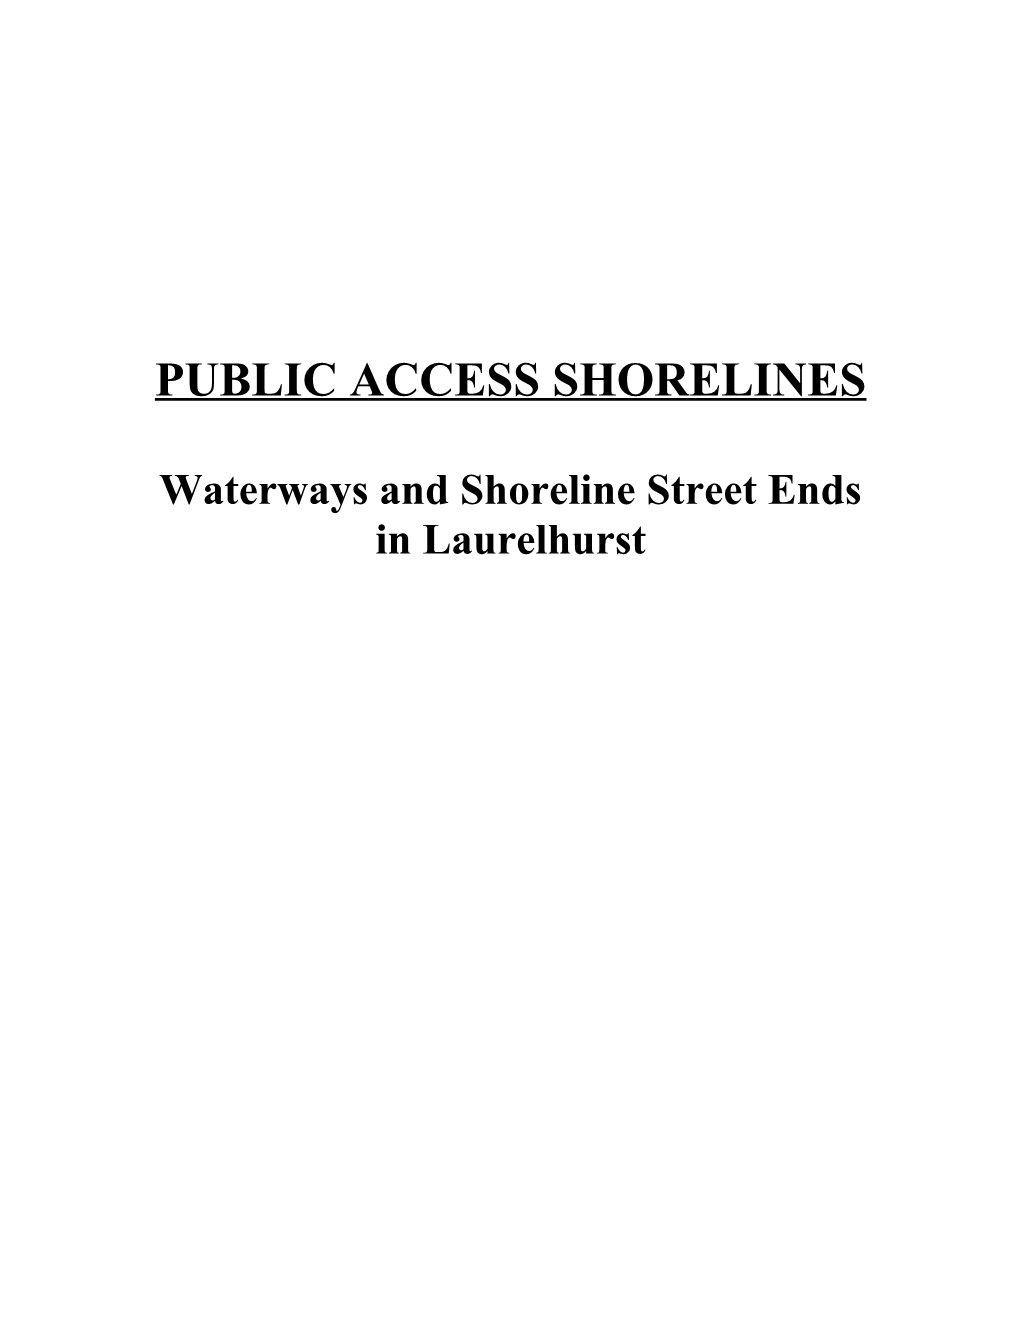 Waterways and Shoreline Street Ends